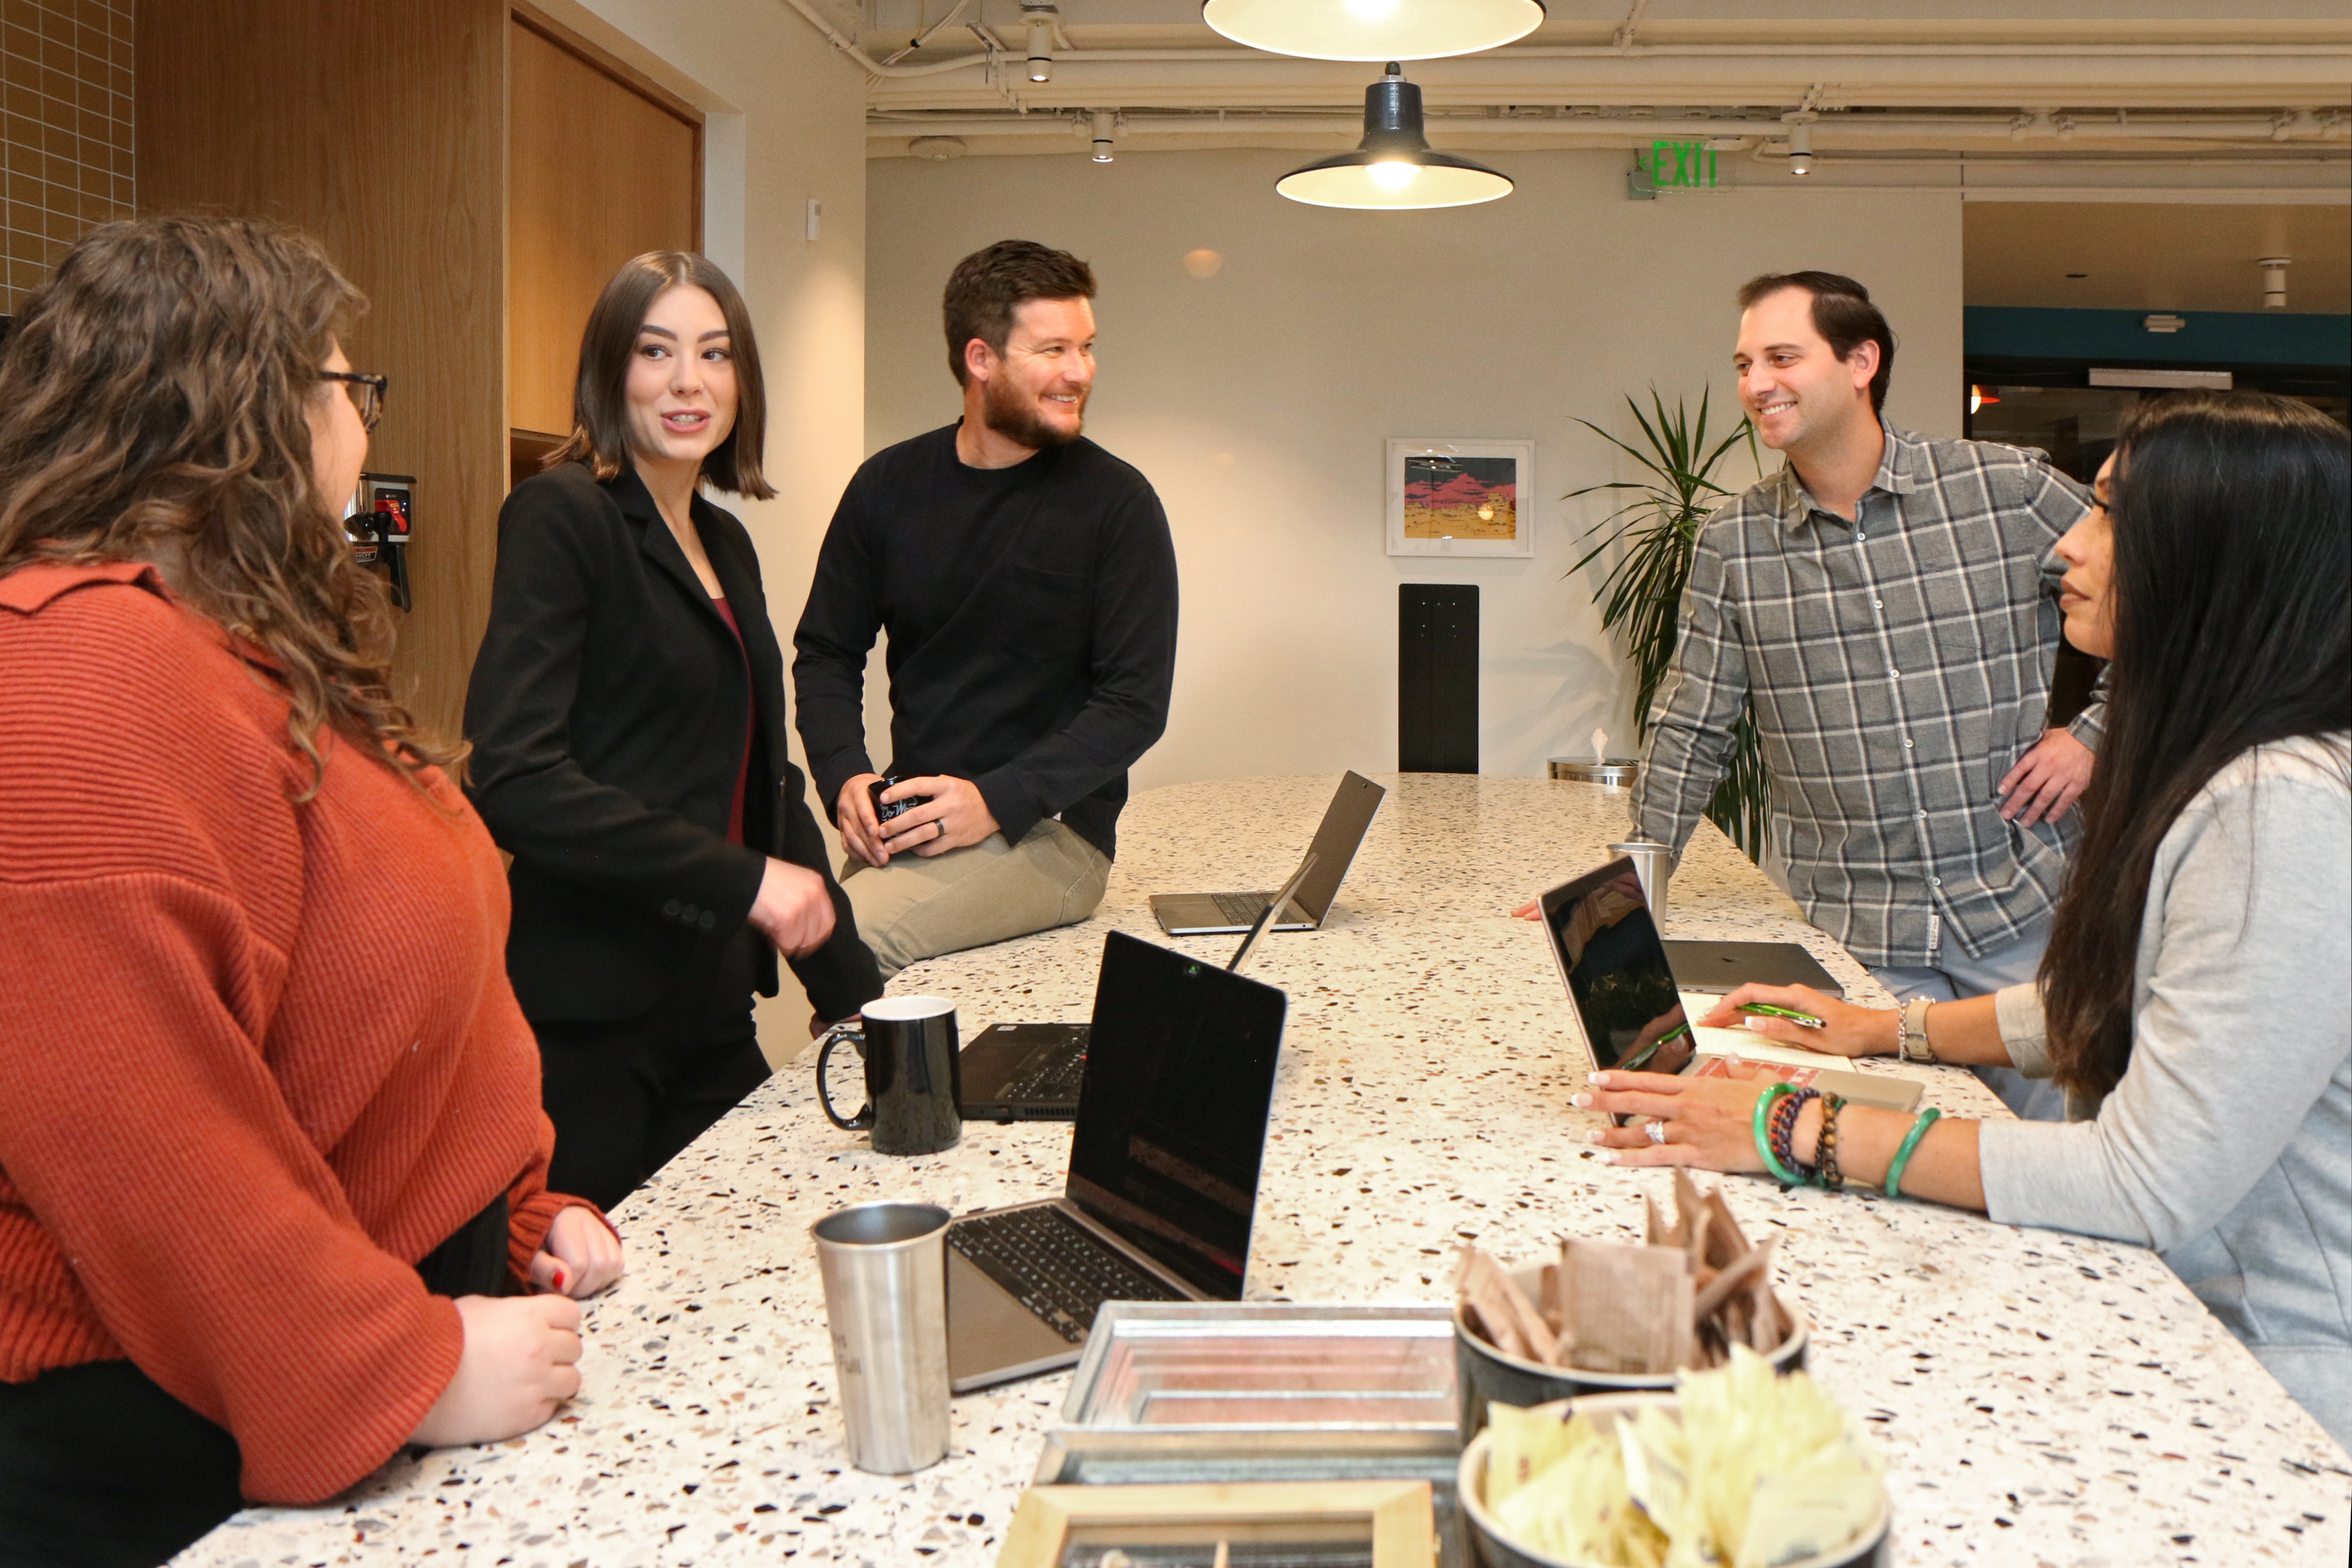 Matillion teammates chatting in company office kitchen